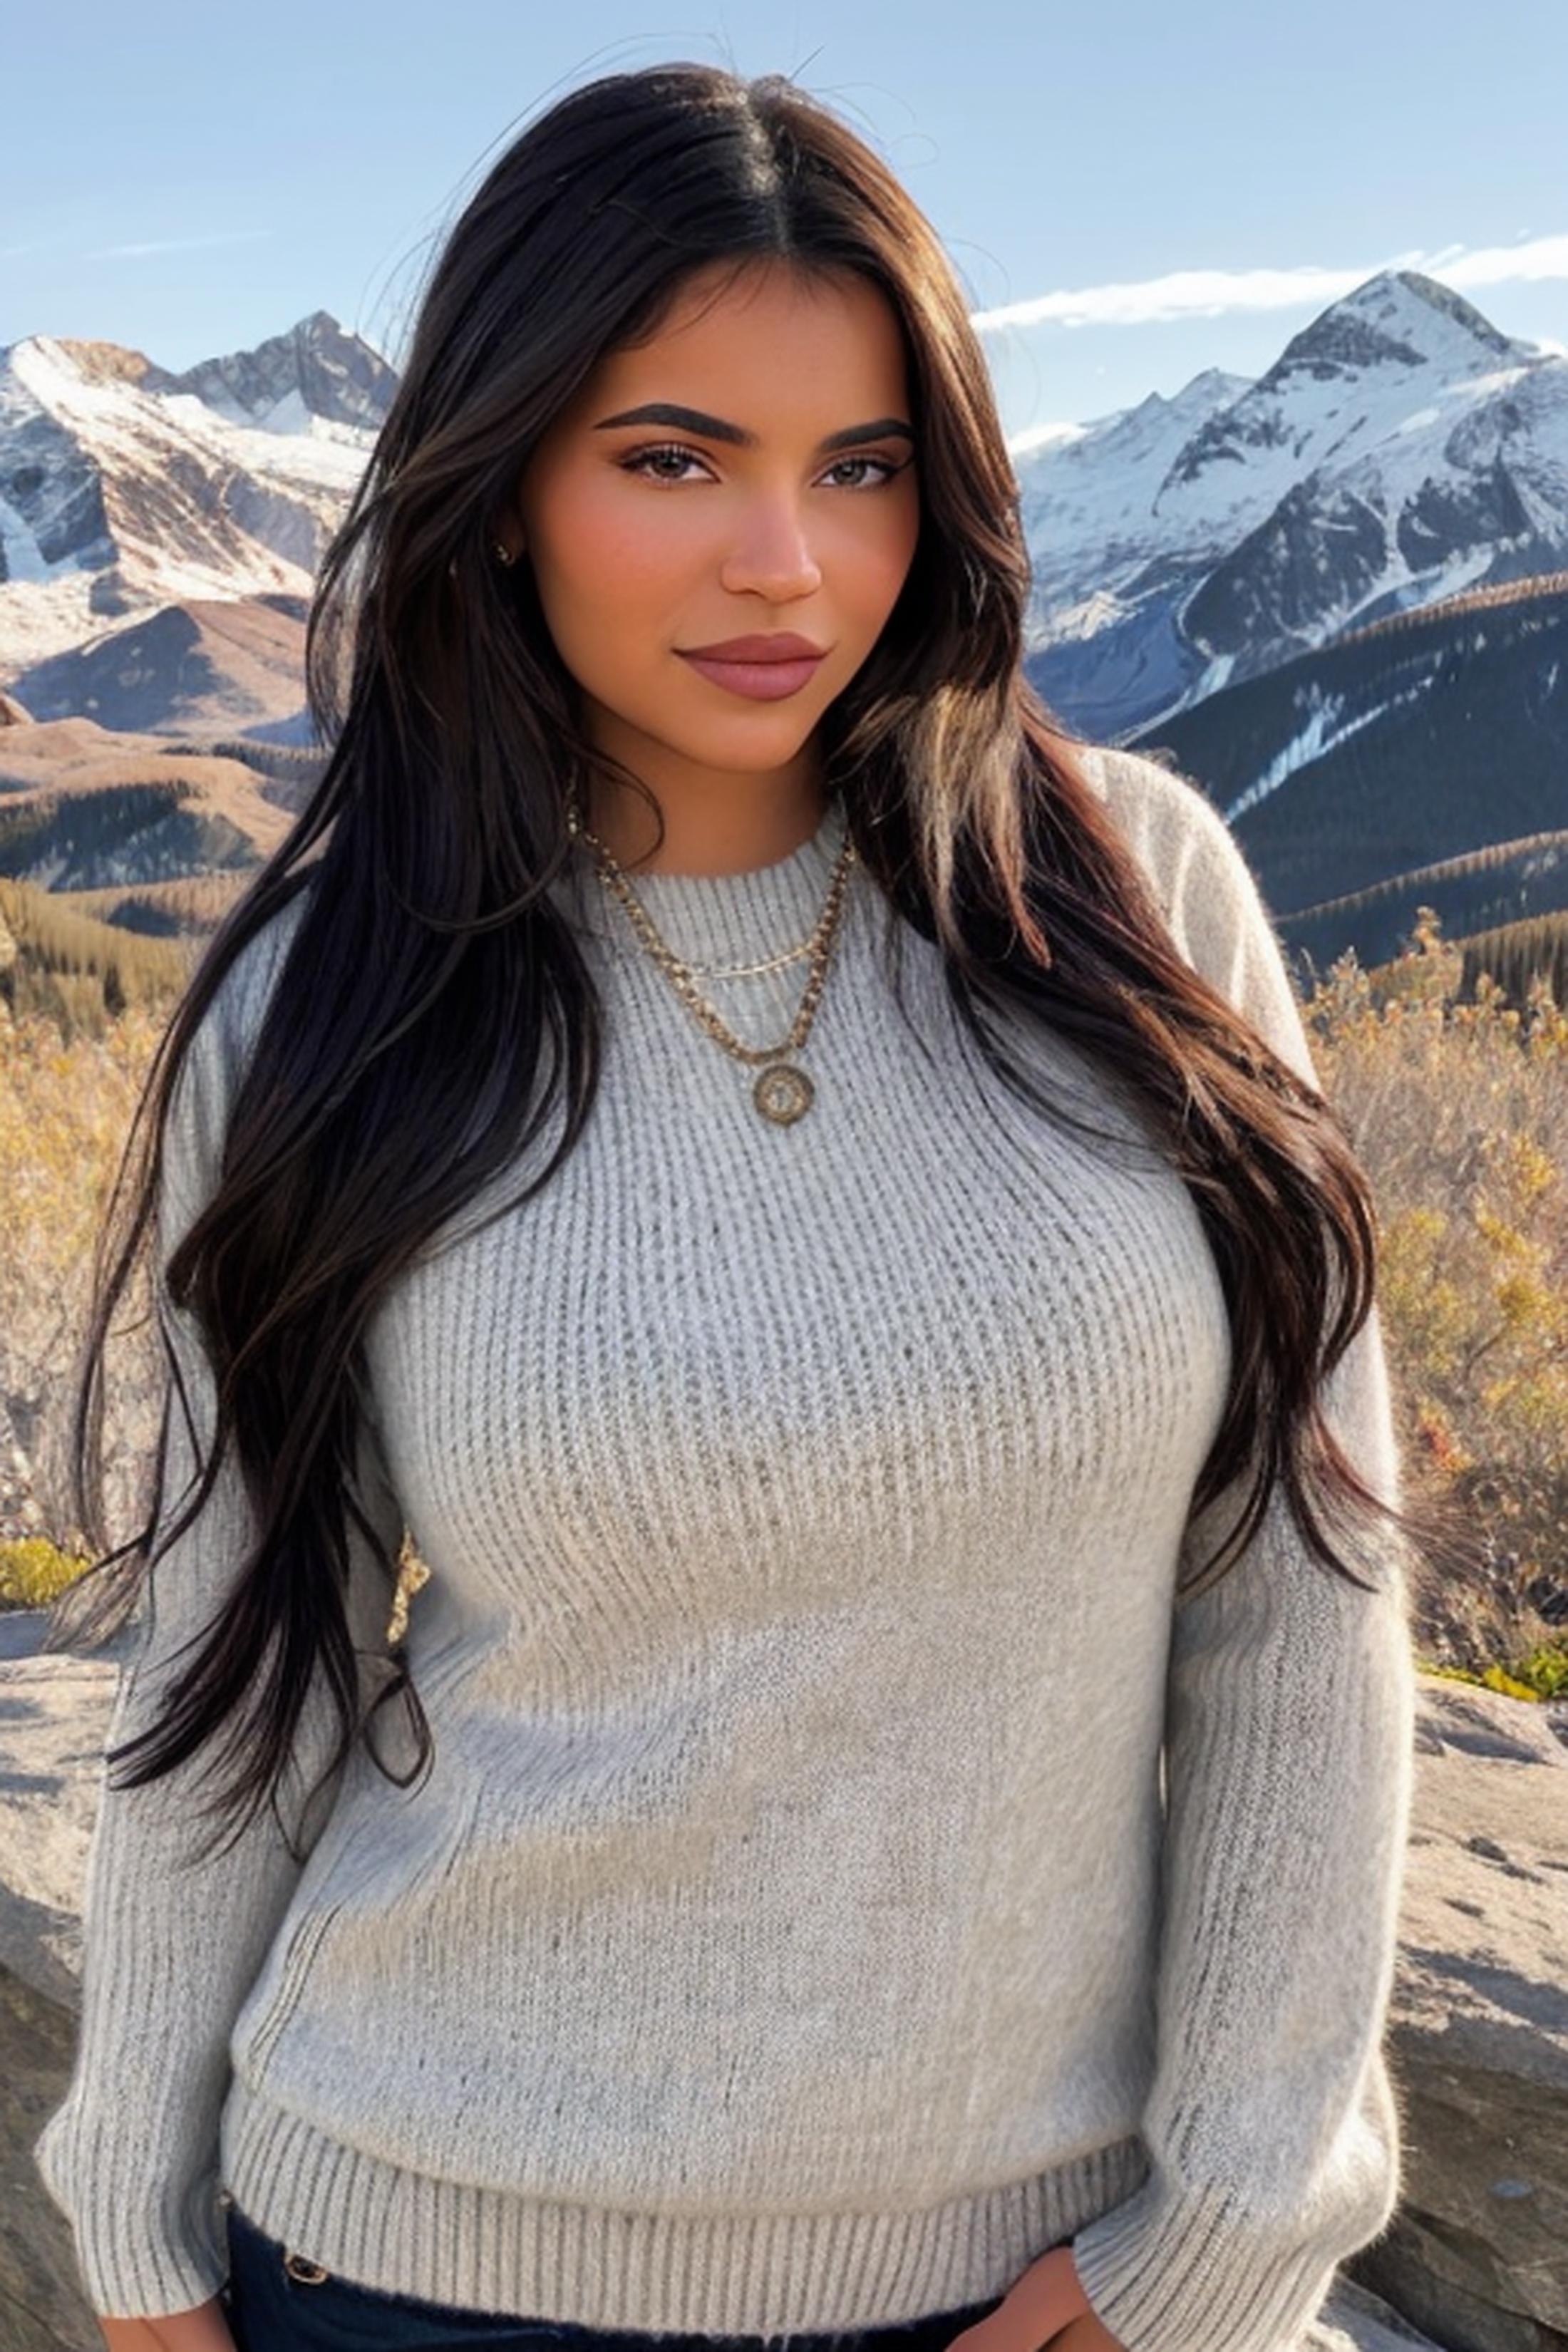 Kylie Jenner - LoRA image by mauro_rivoux